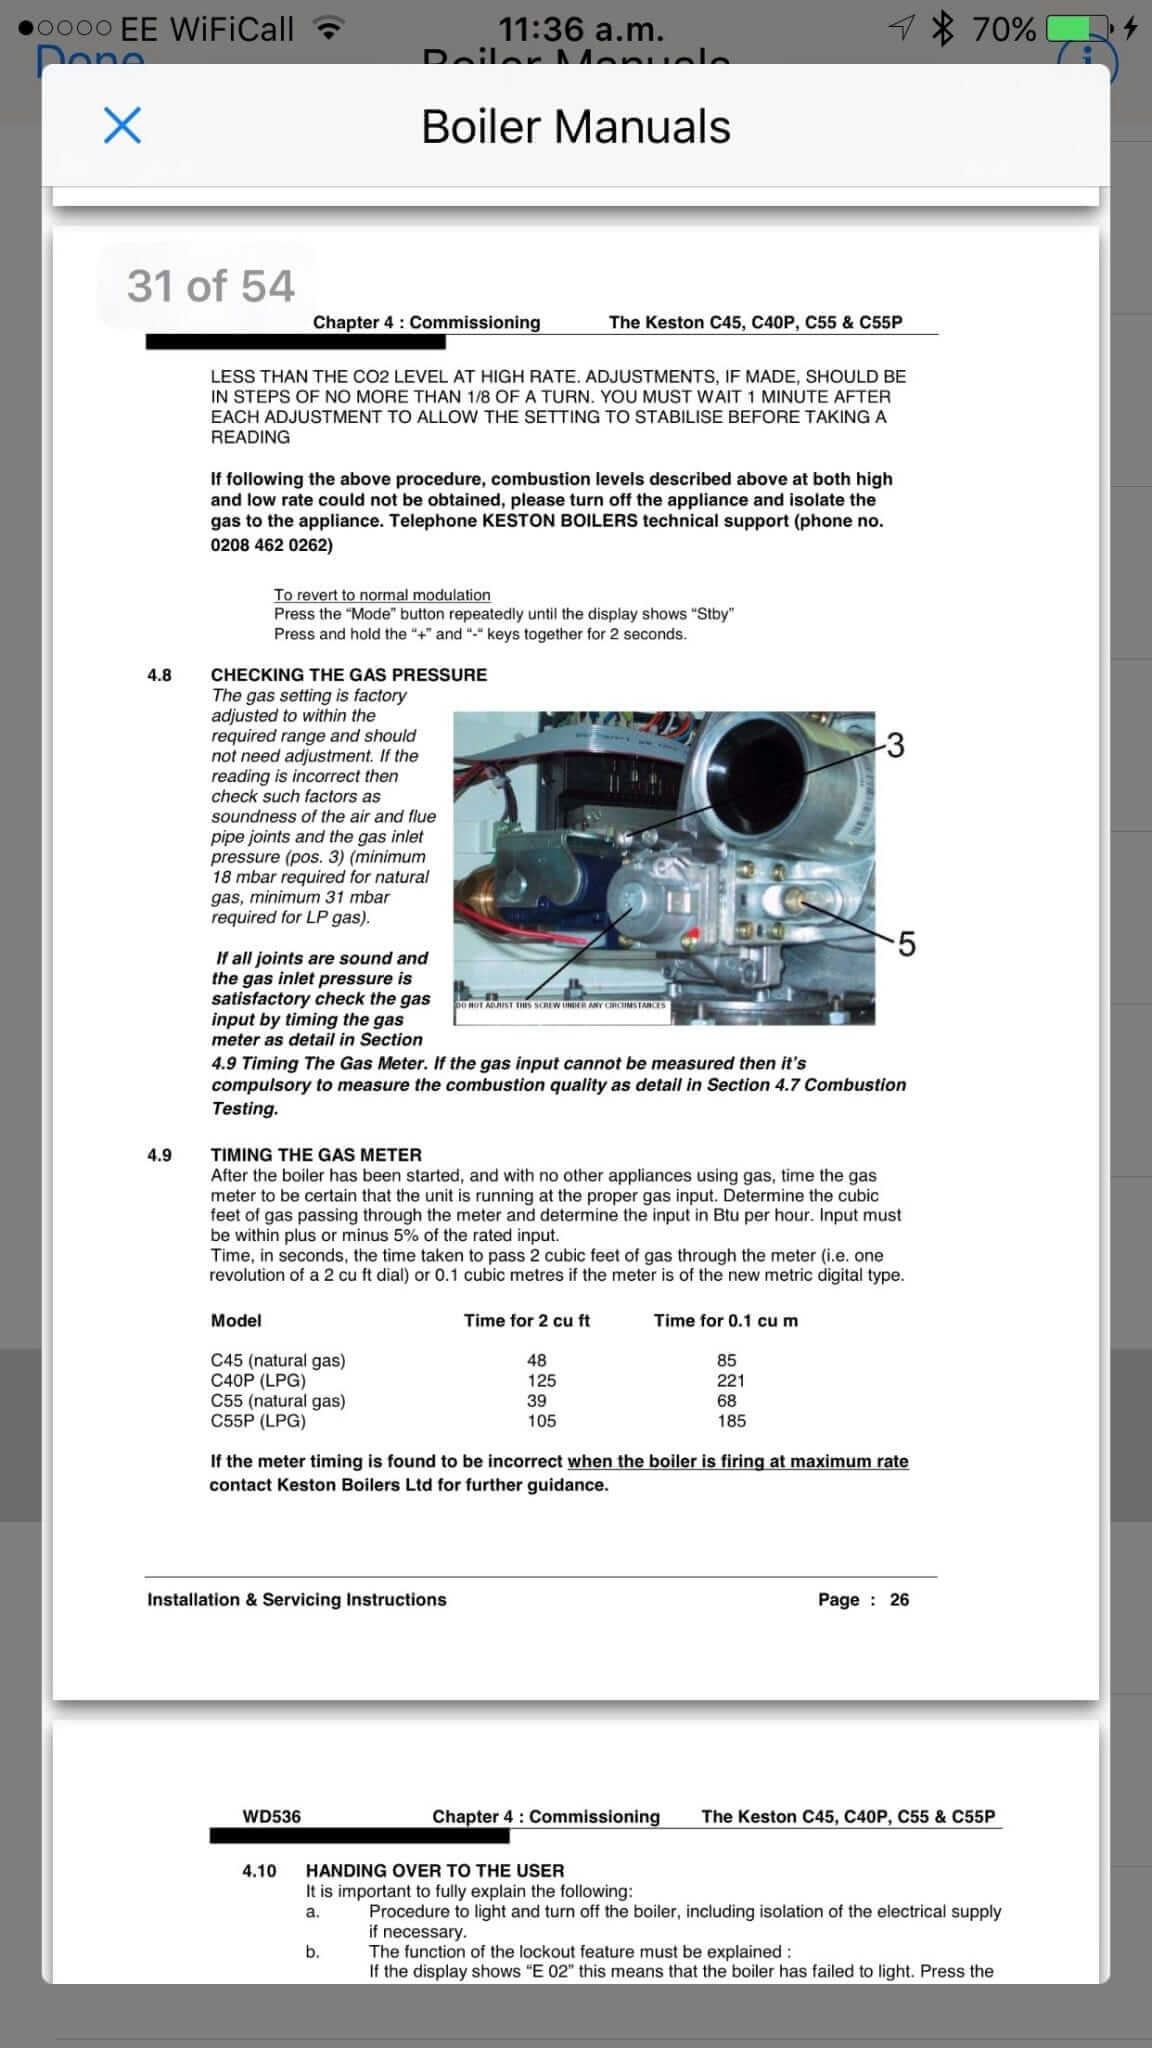 Boiler manual on iPhone